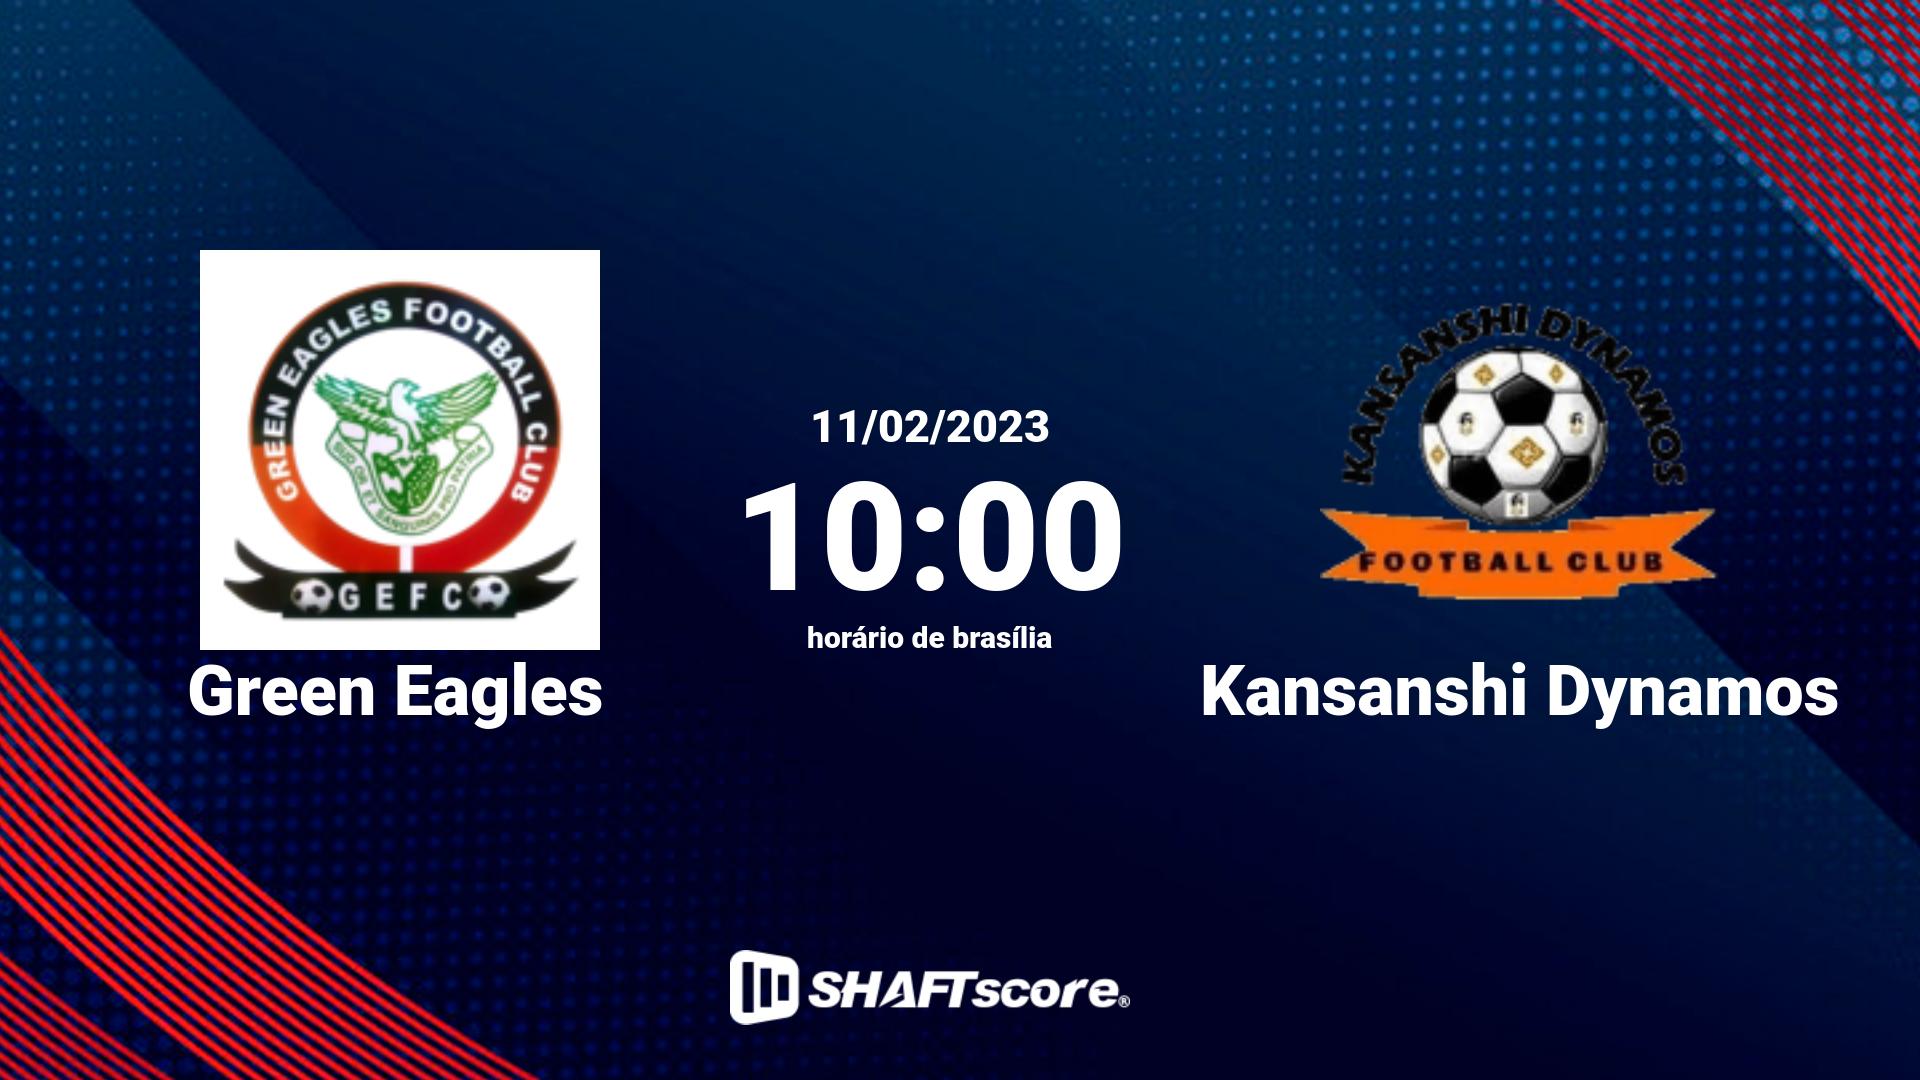 Estatísticas do jogo Green Eagles vs Kansanshi Dynamos 11.02 10:00